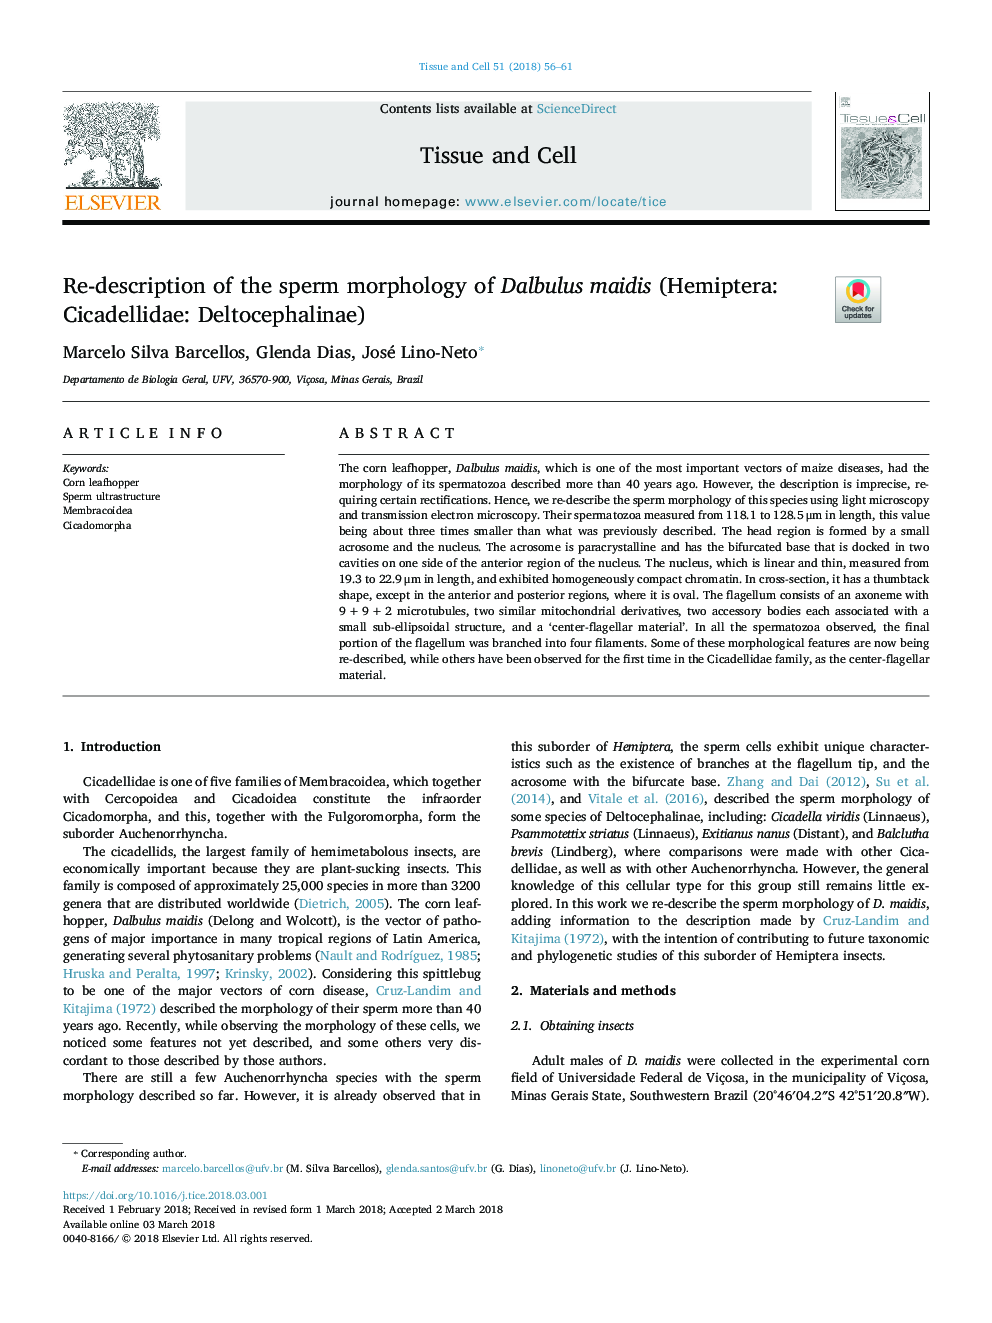 Re-description of the sperm morphology of Dalbulus maidis (Hemiptera: Cicadellidae: Deltocephalinae)